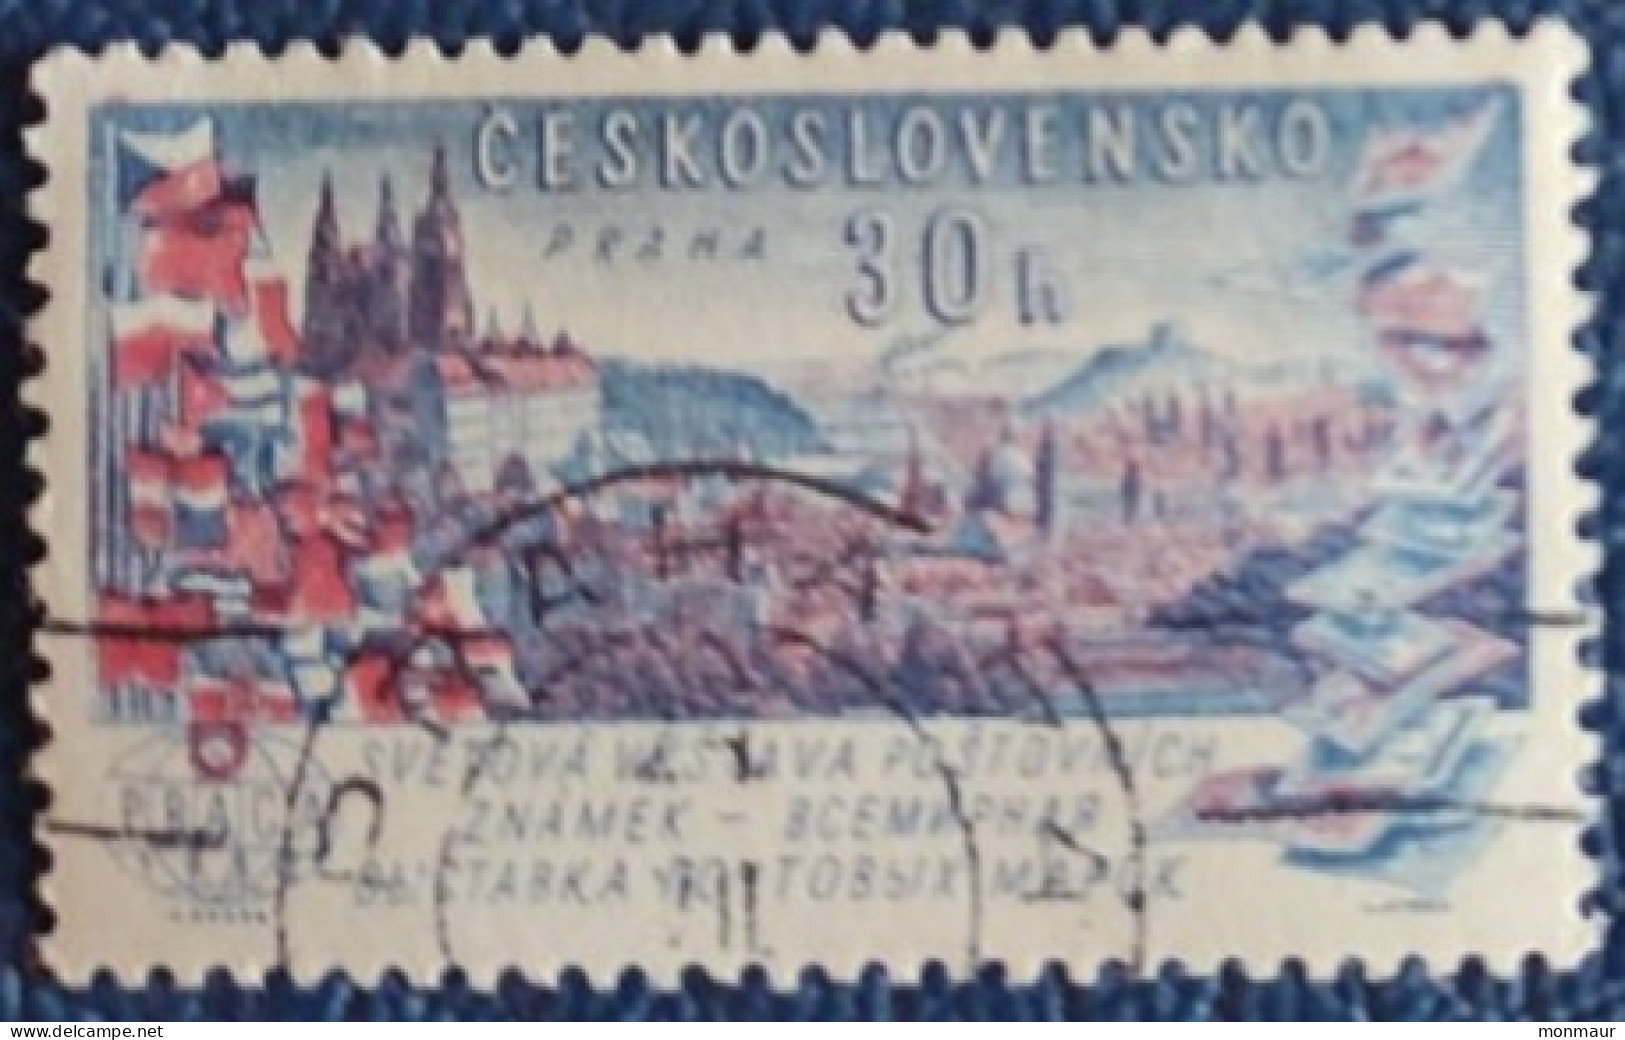 CECOSLOVACCHIA 1962 INTERNATIONAL STAMP EXHIBITYION - Oblitérés